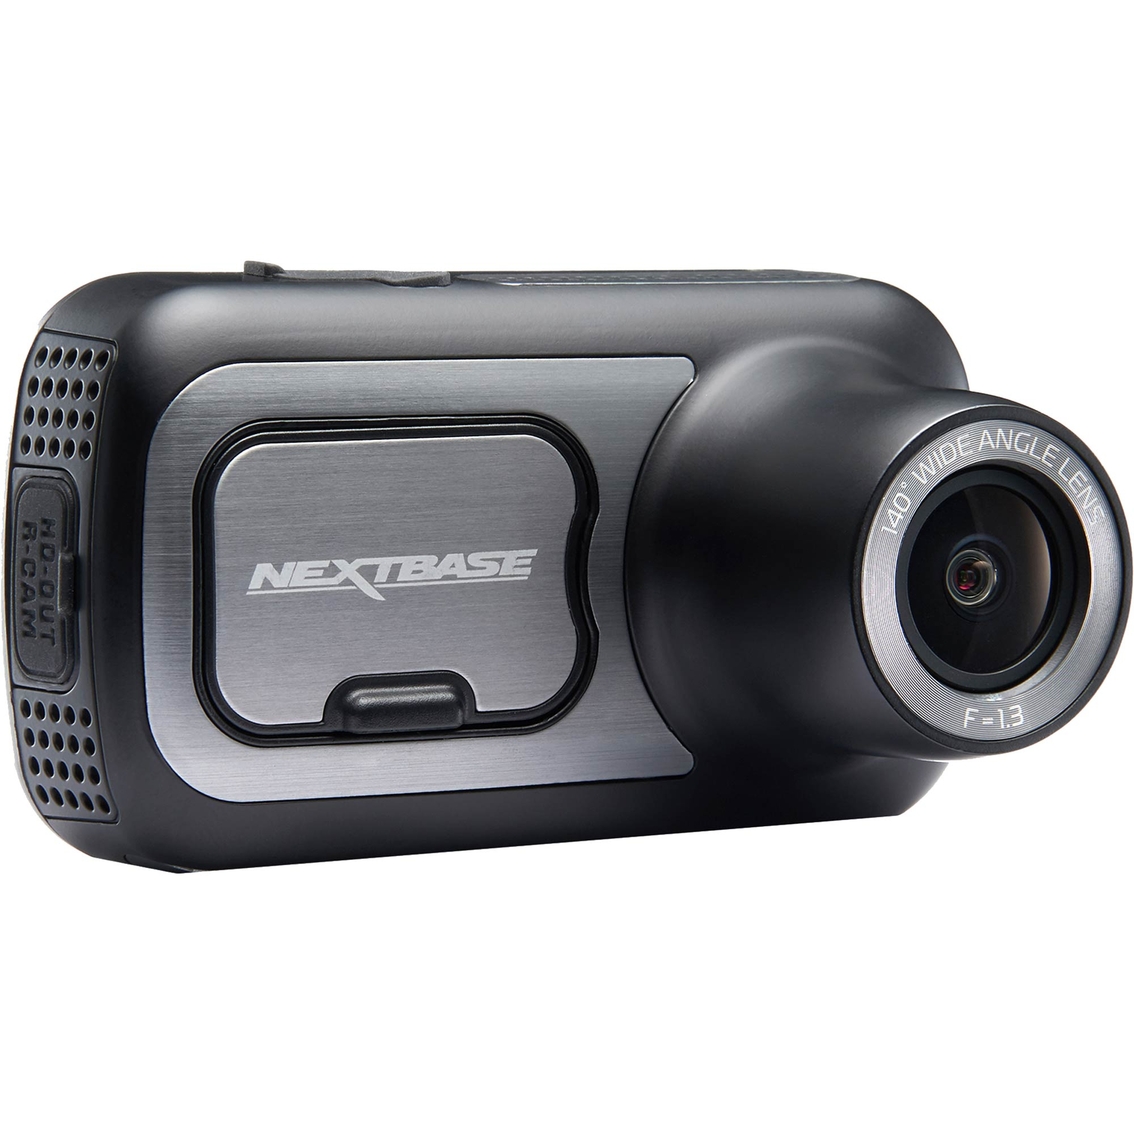  Nextbase 422GW Dash Cam Small with APP- Full 1440p